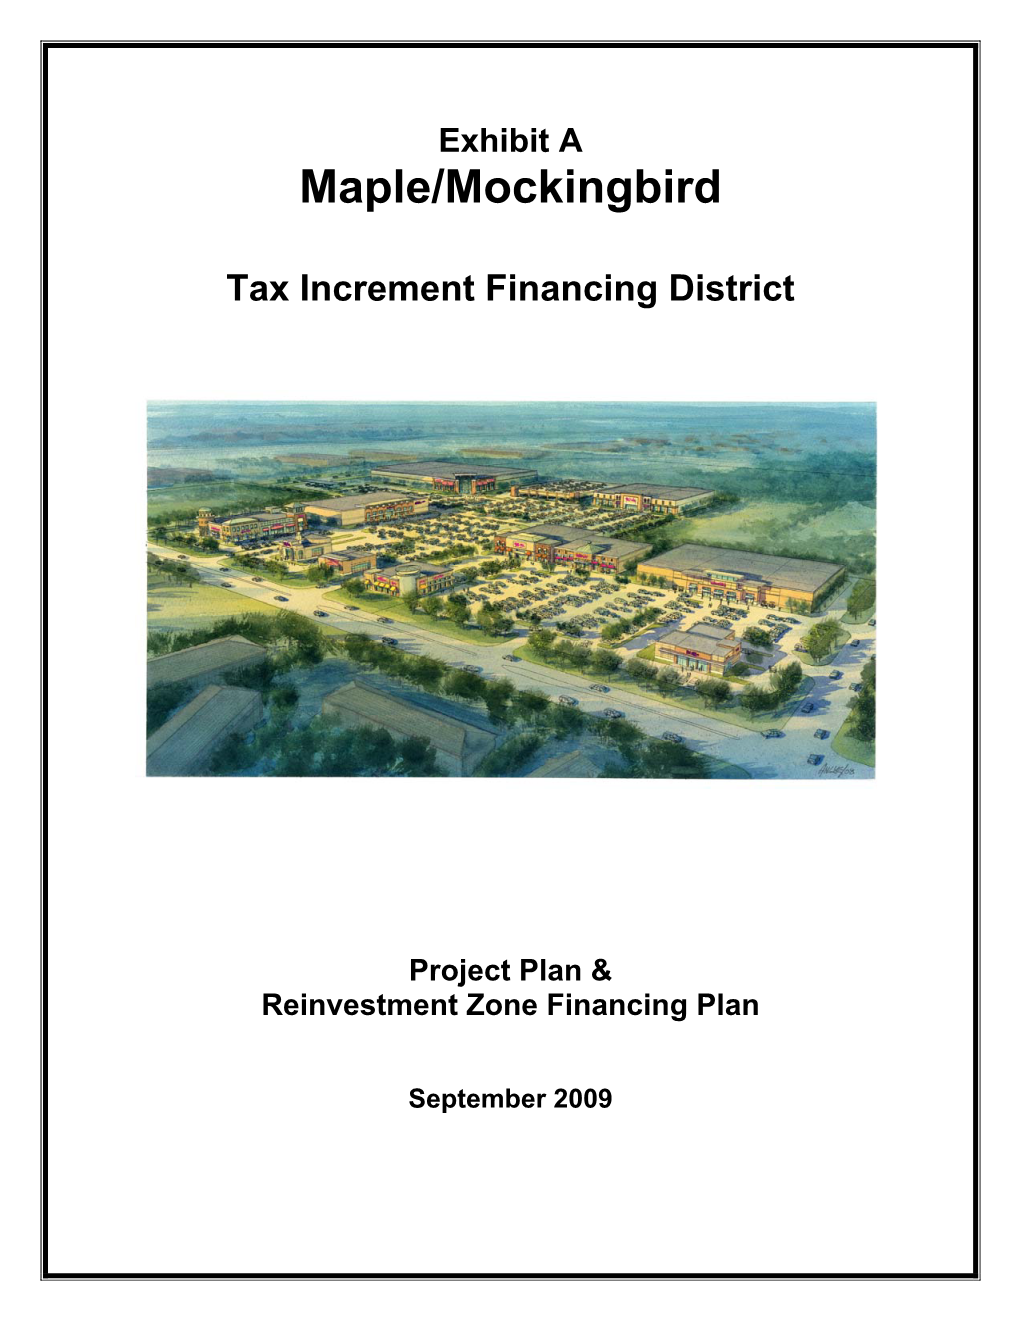 Maple/Mockingbird TIF District Plan